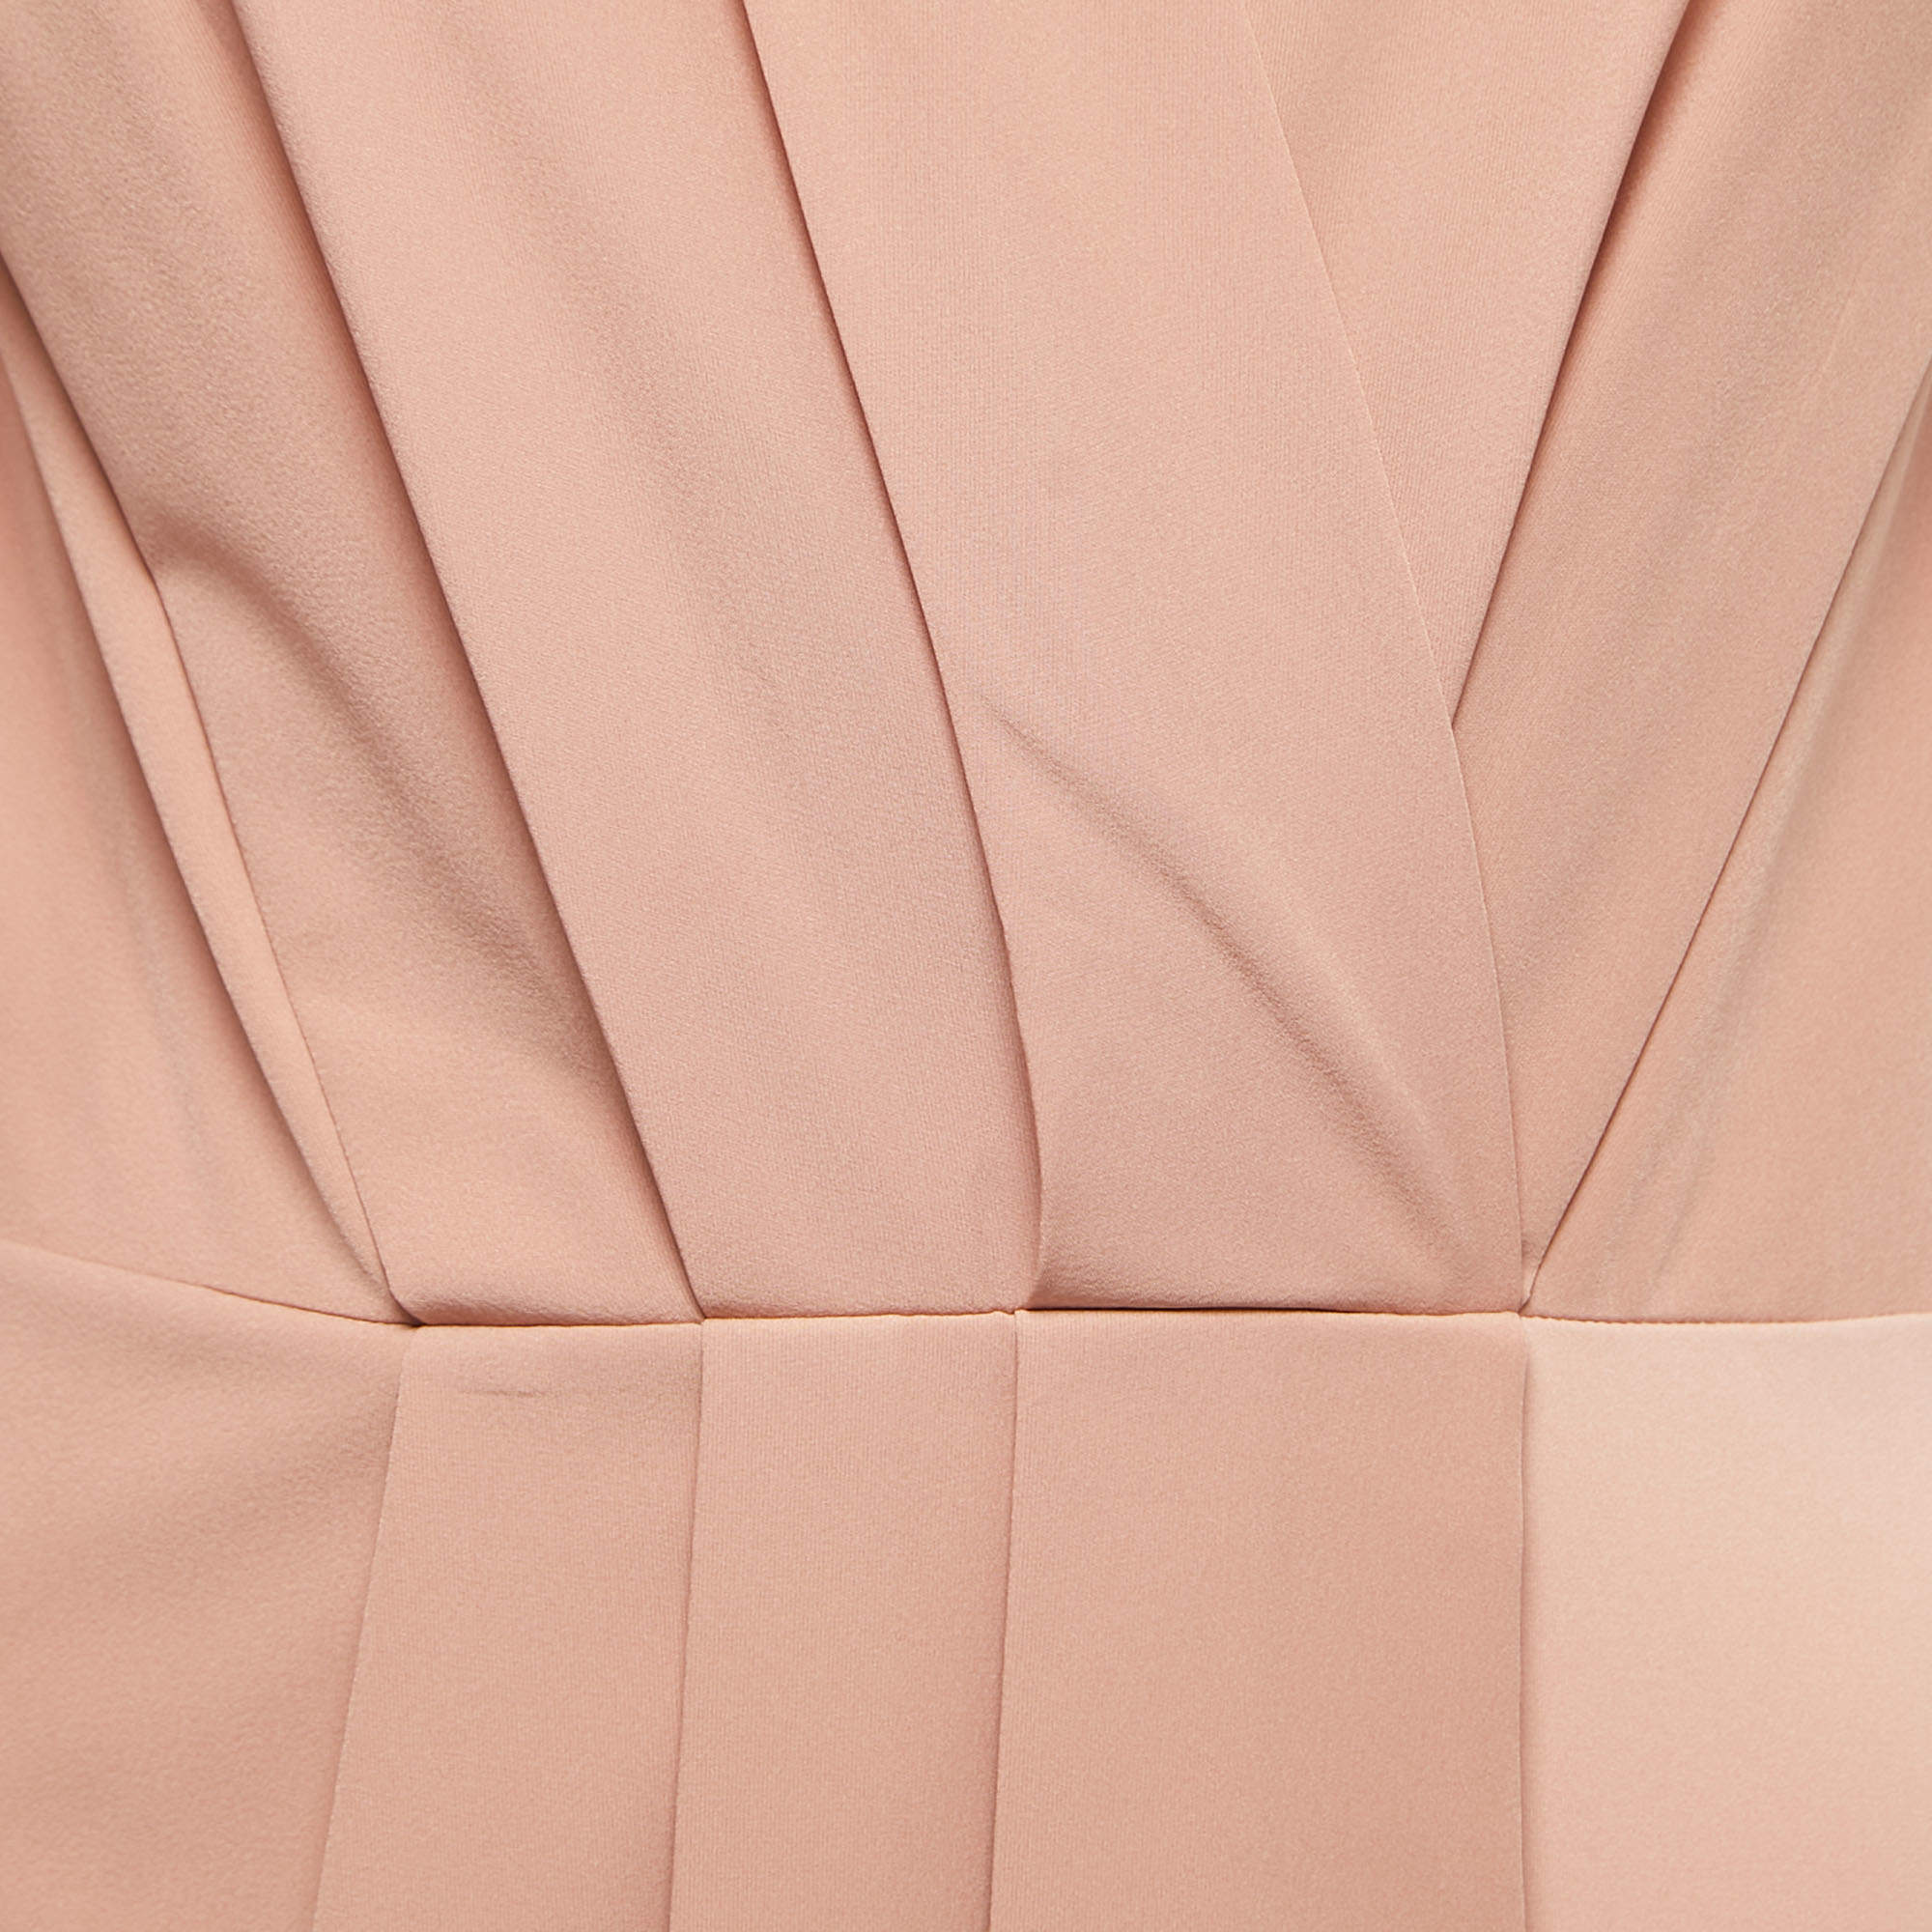 Elisabetta Franchi Pink Jersey Draped One Shoulder Bodysuit M